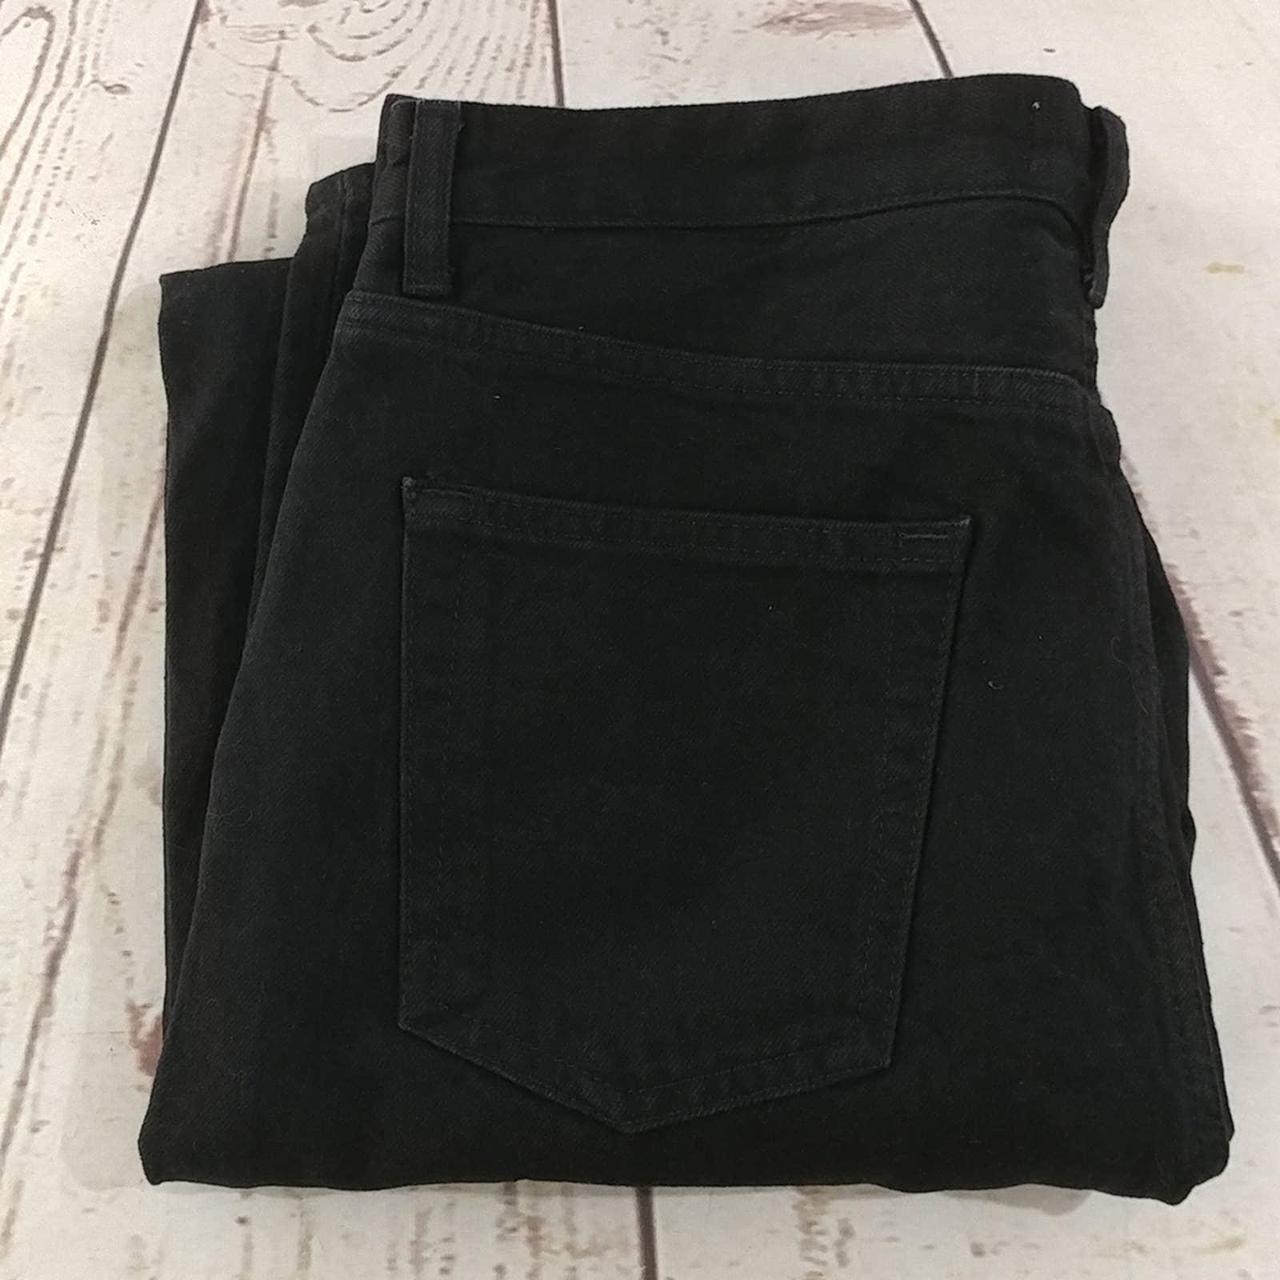 Zara black jeans with slits on the inner side seams.... - Depop